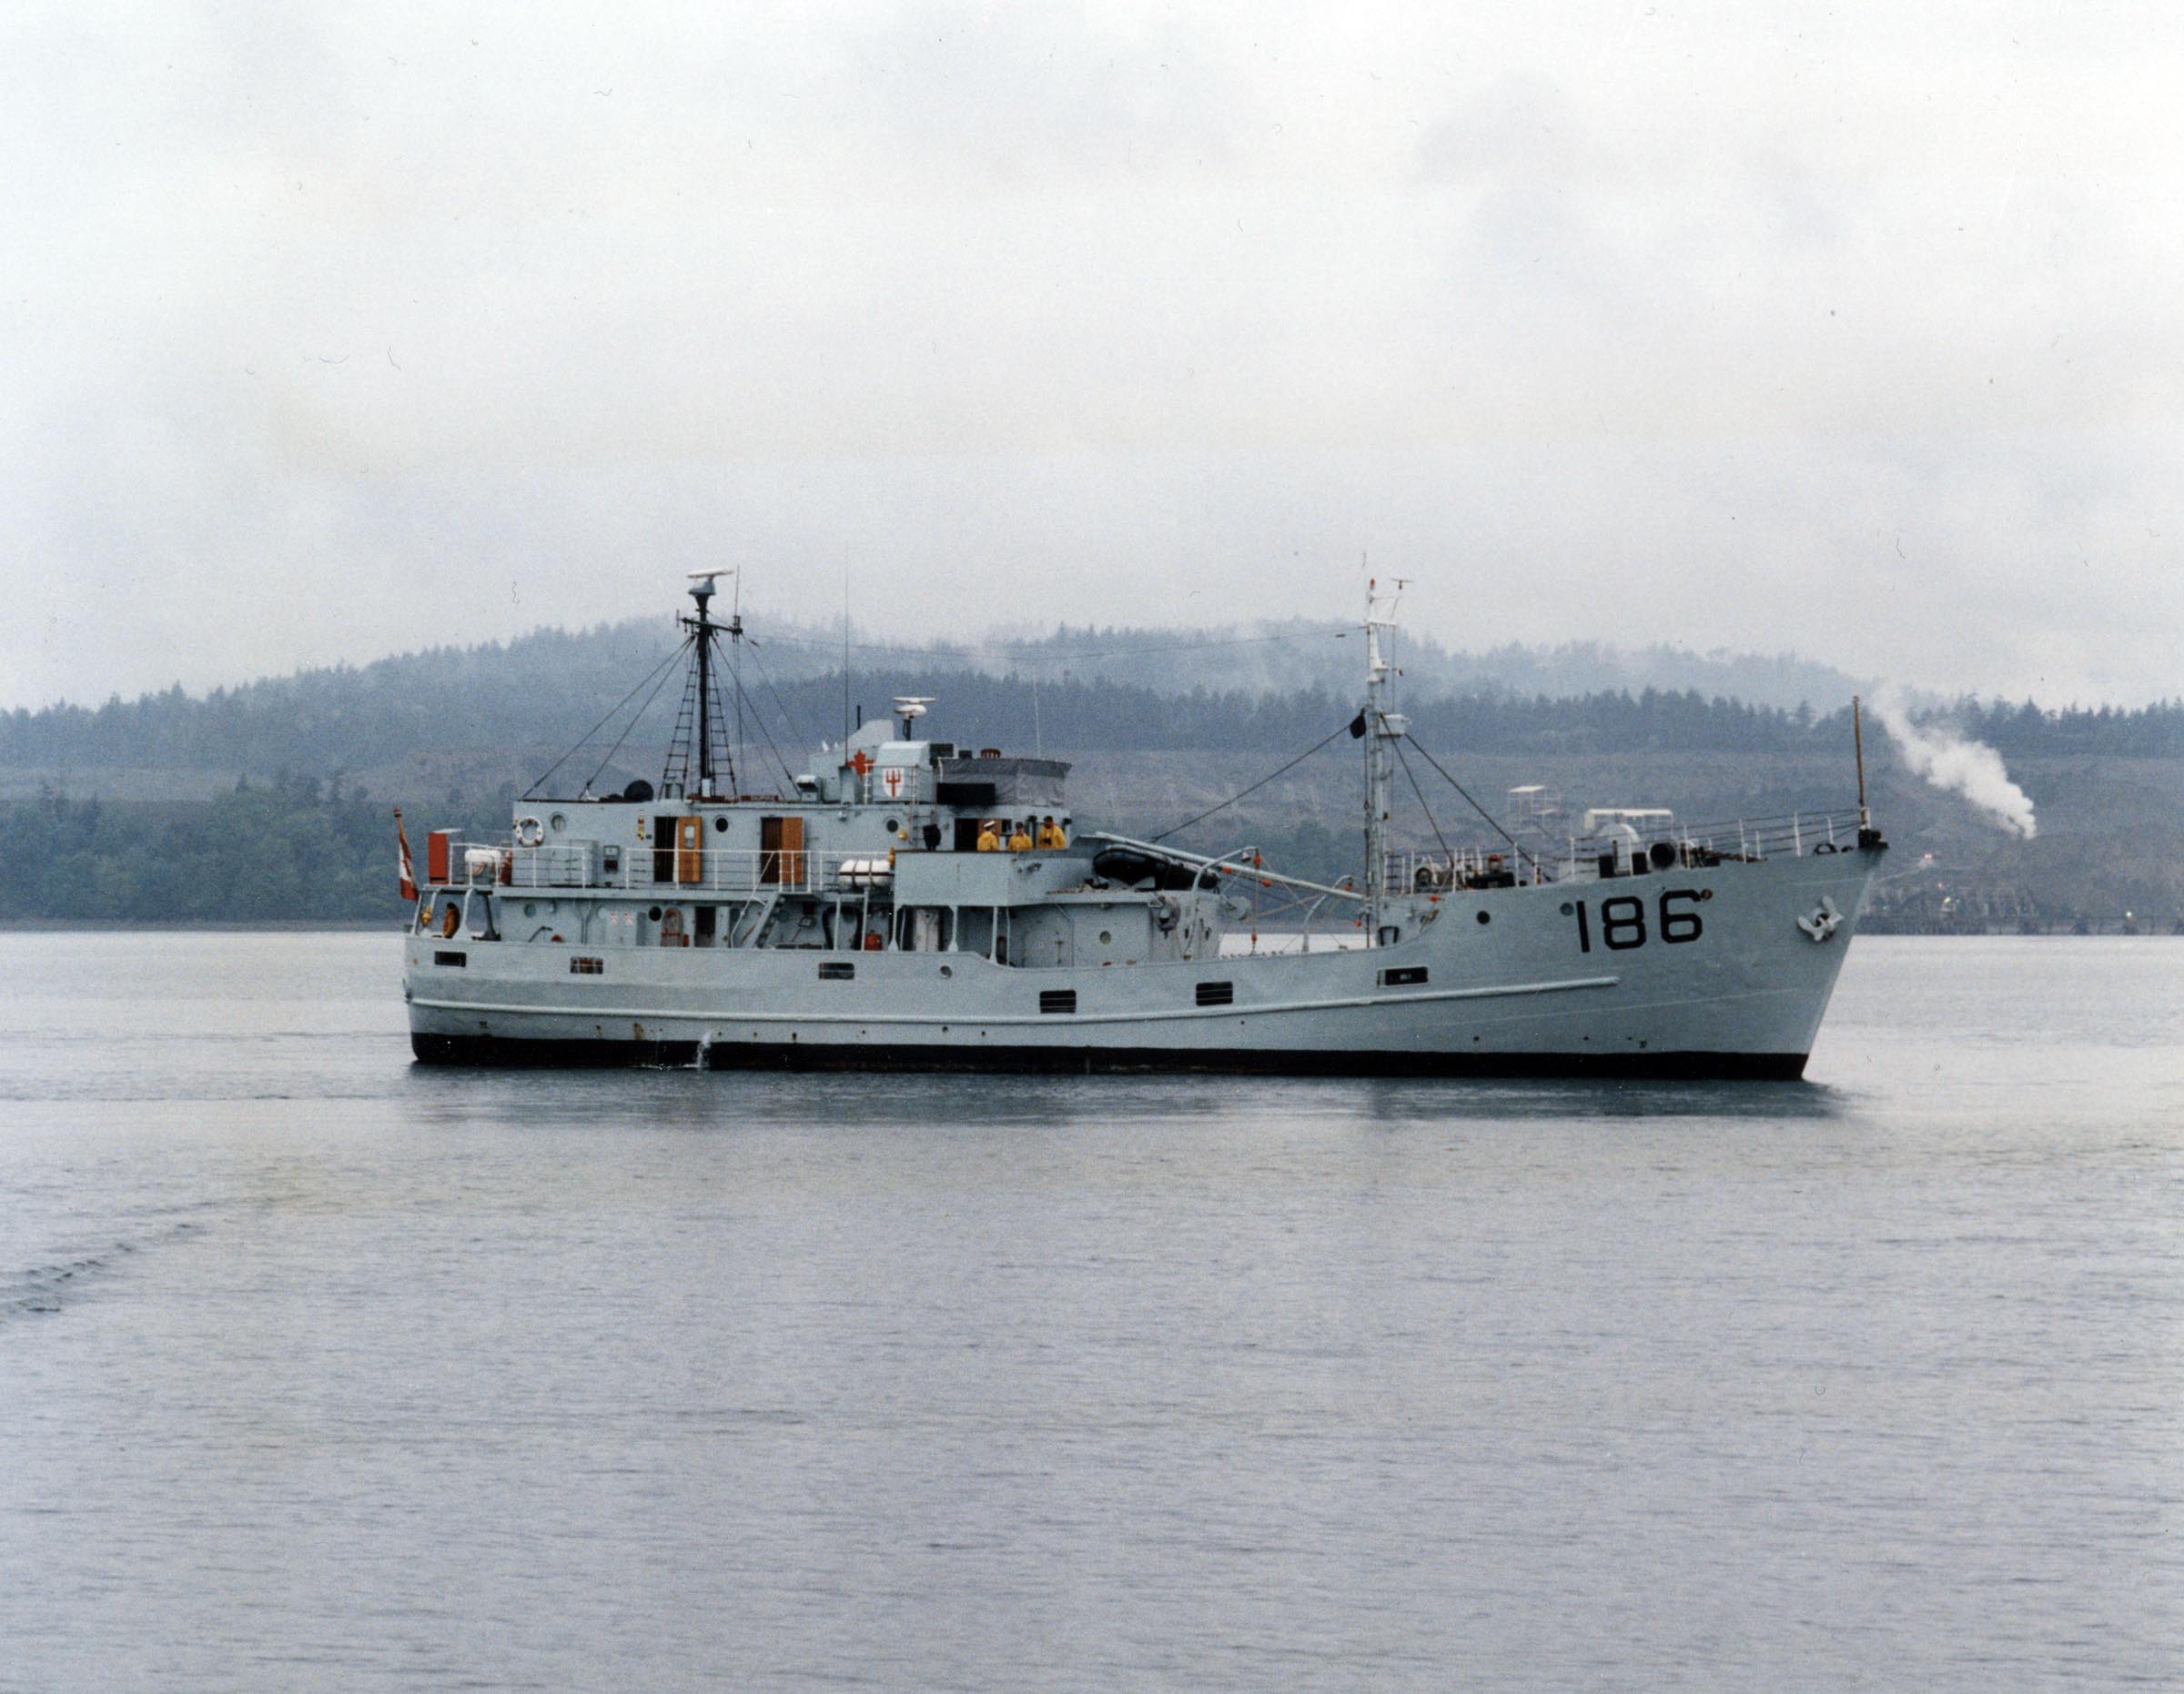 HMCS PORTE DAUPHINE